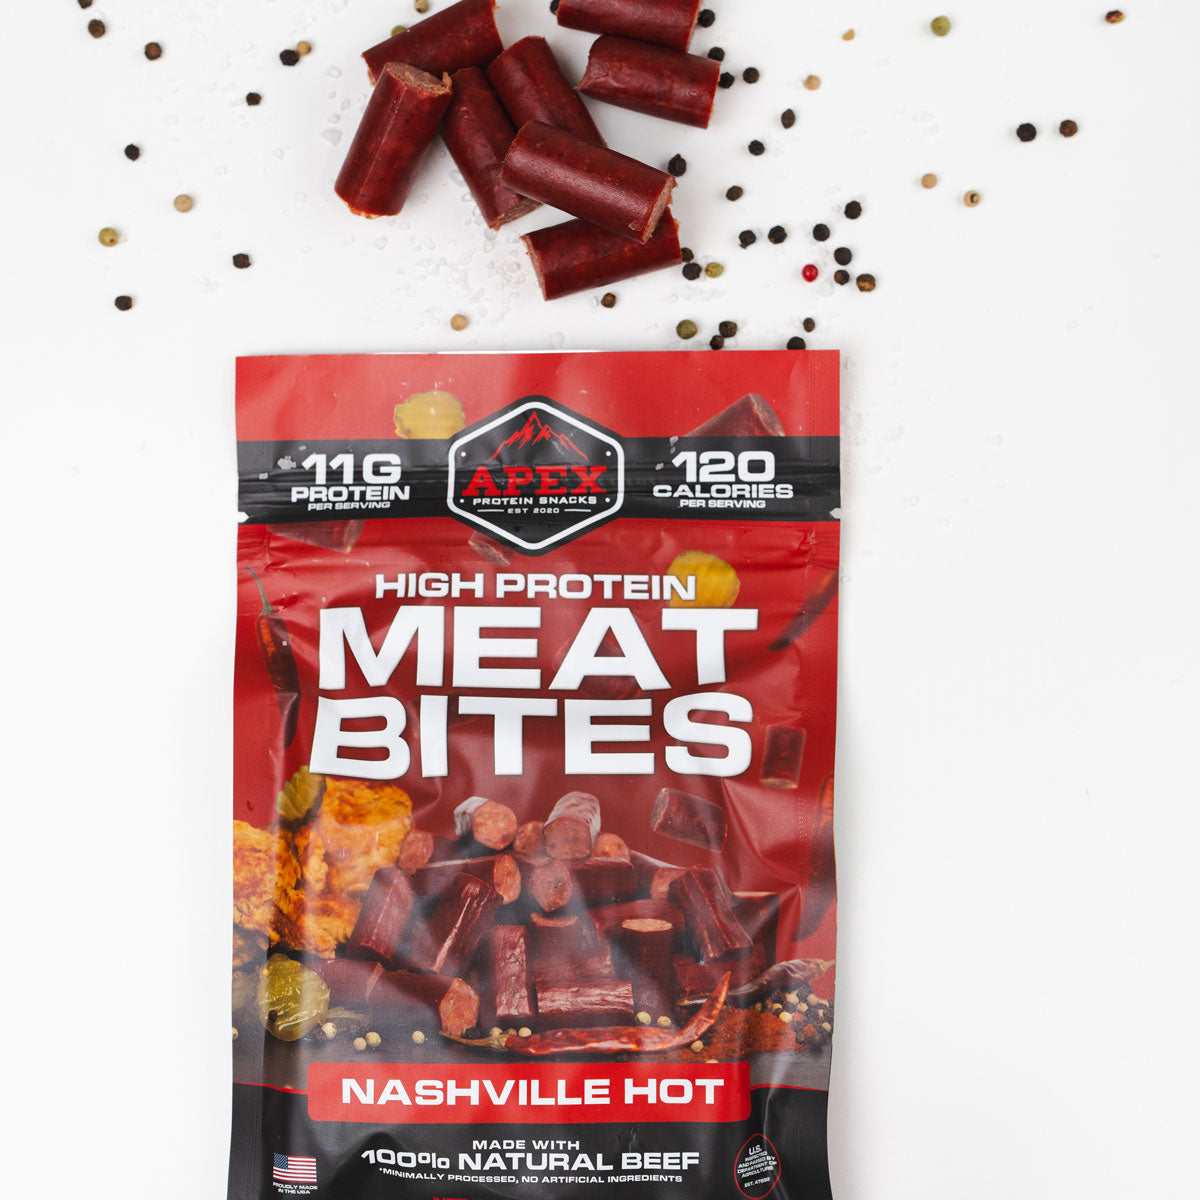 Nashville hot Protein Meat Bites